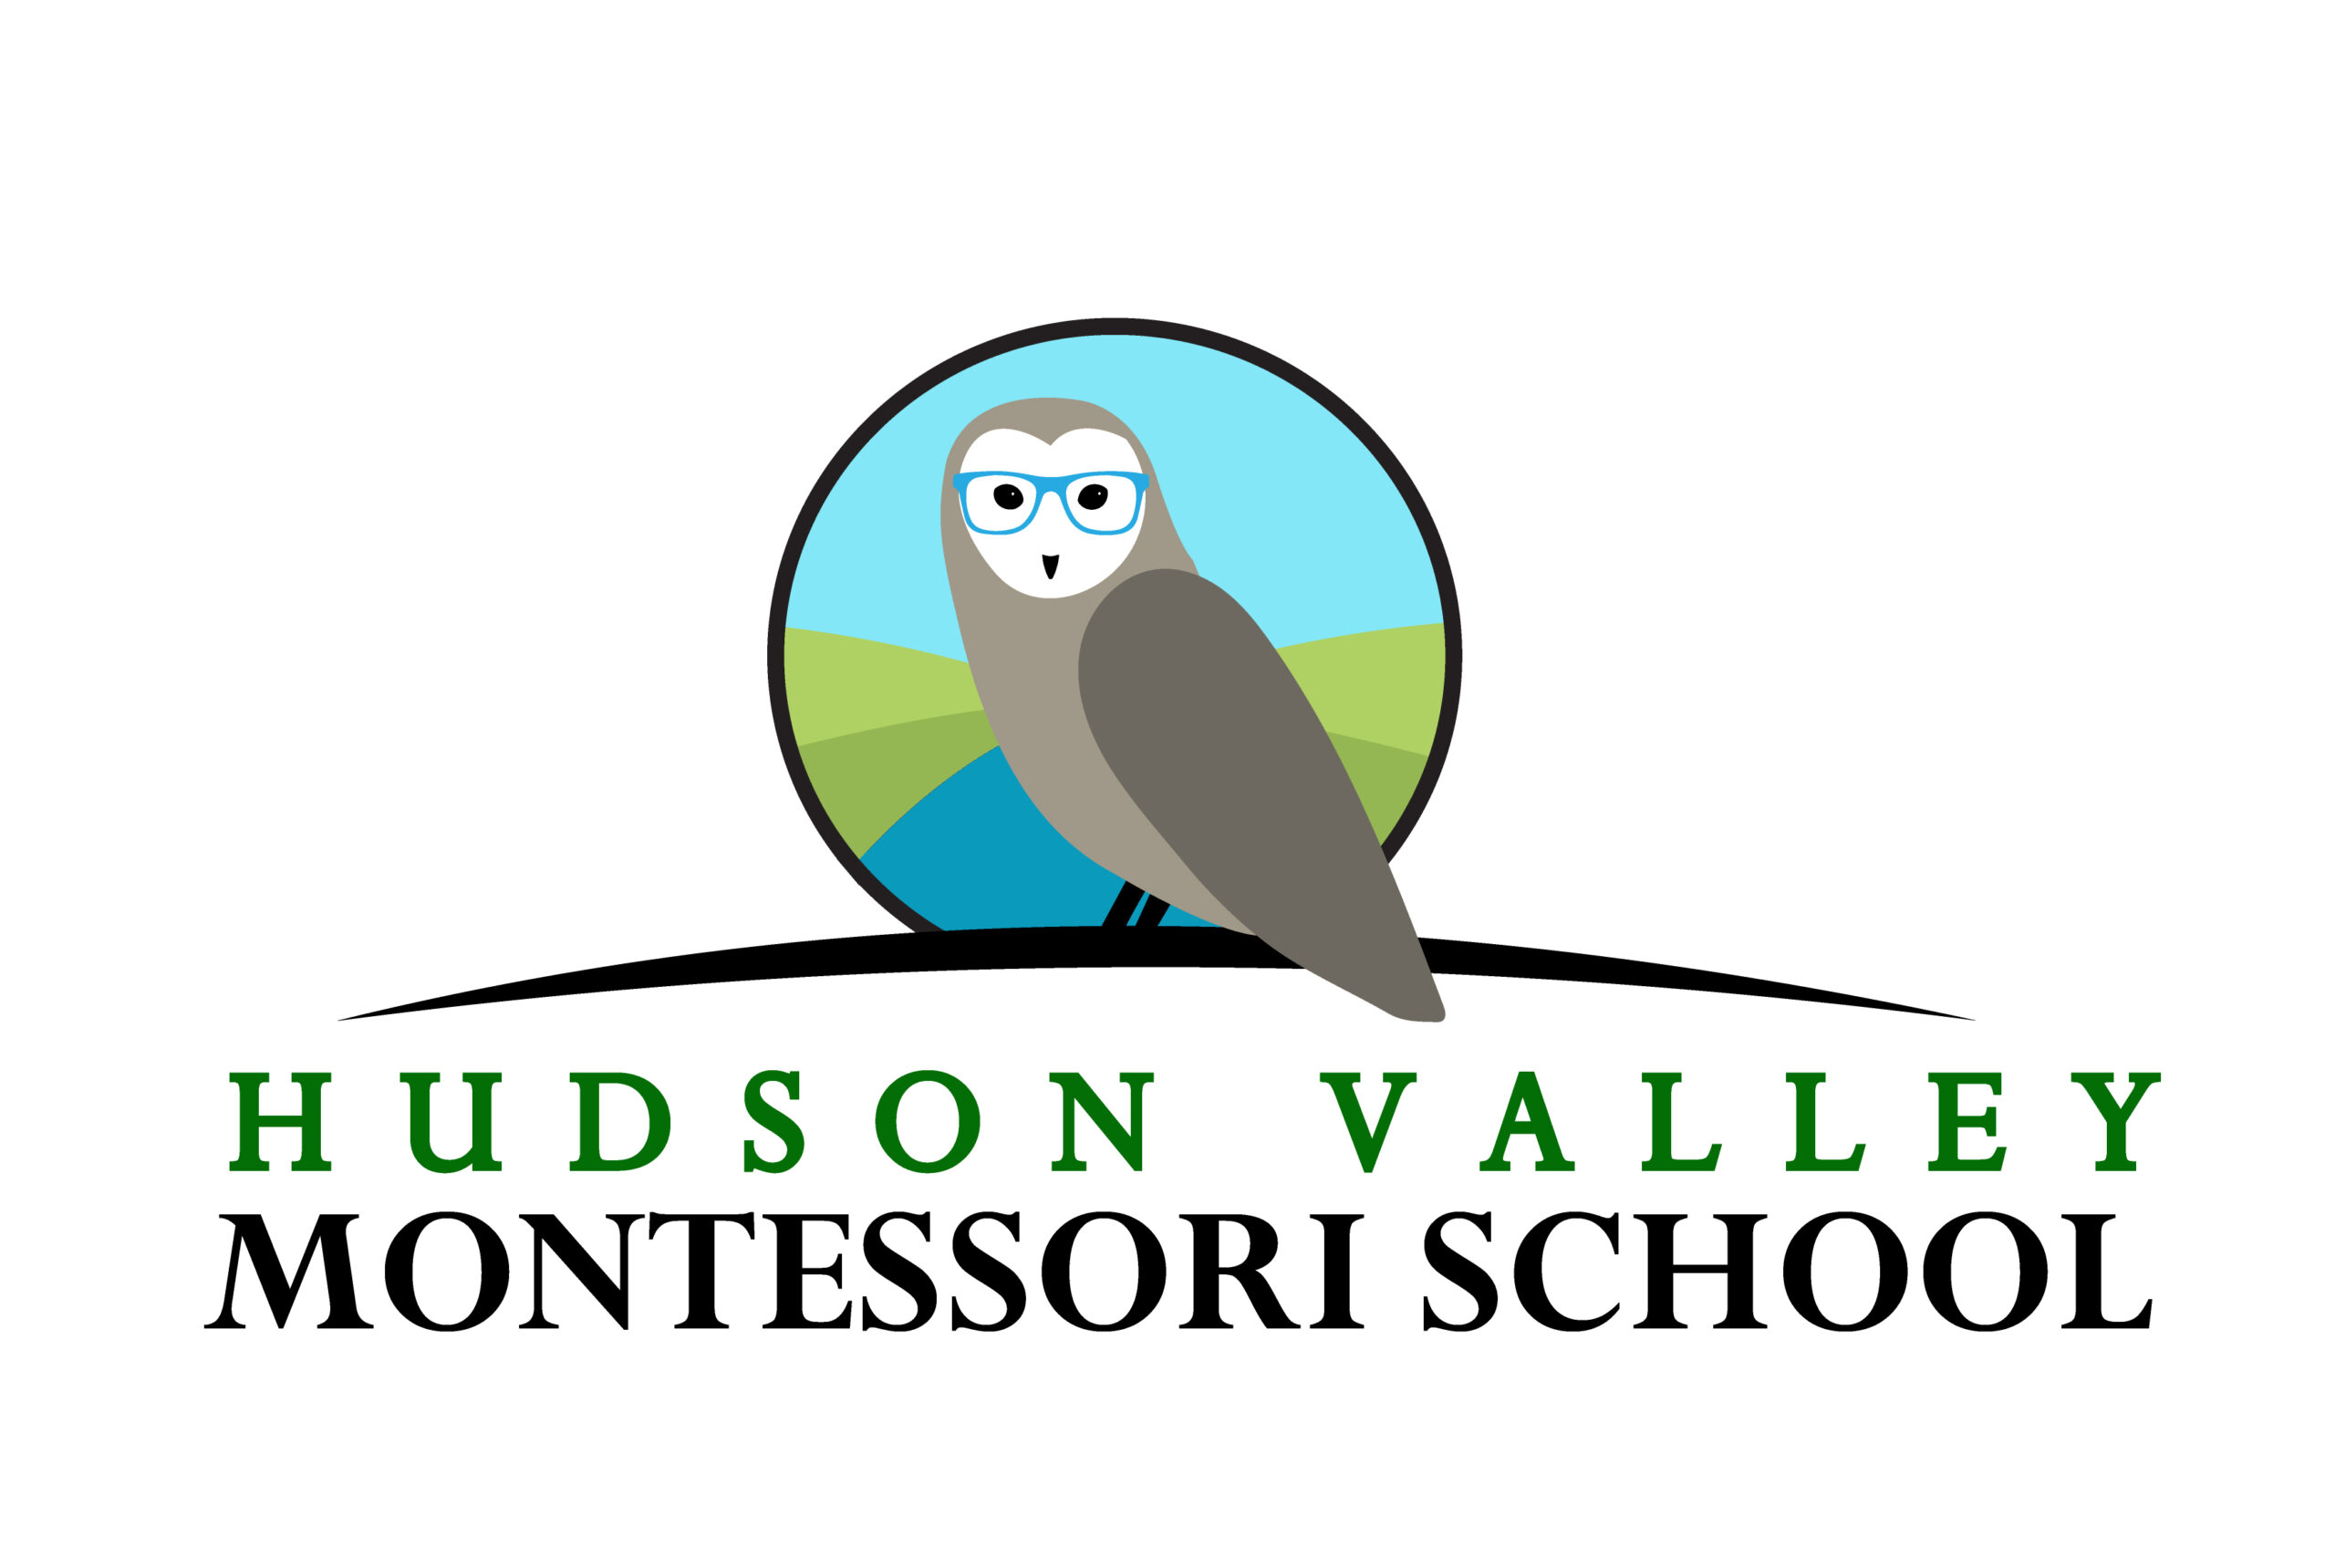 Hudson Valley Montessori School